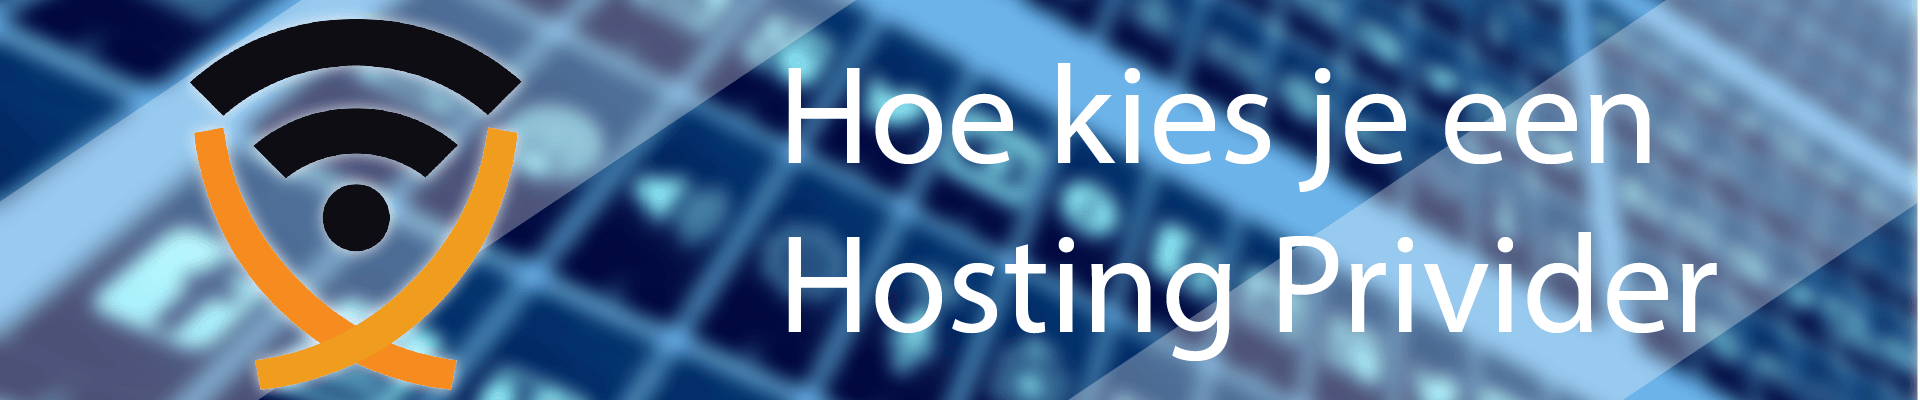 hosting provider kiezen